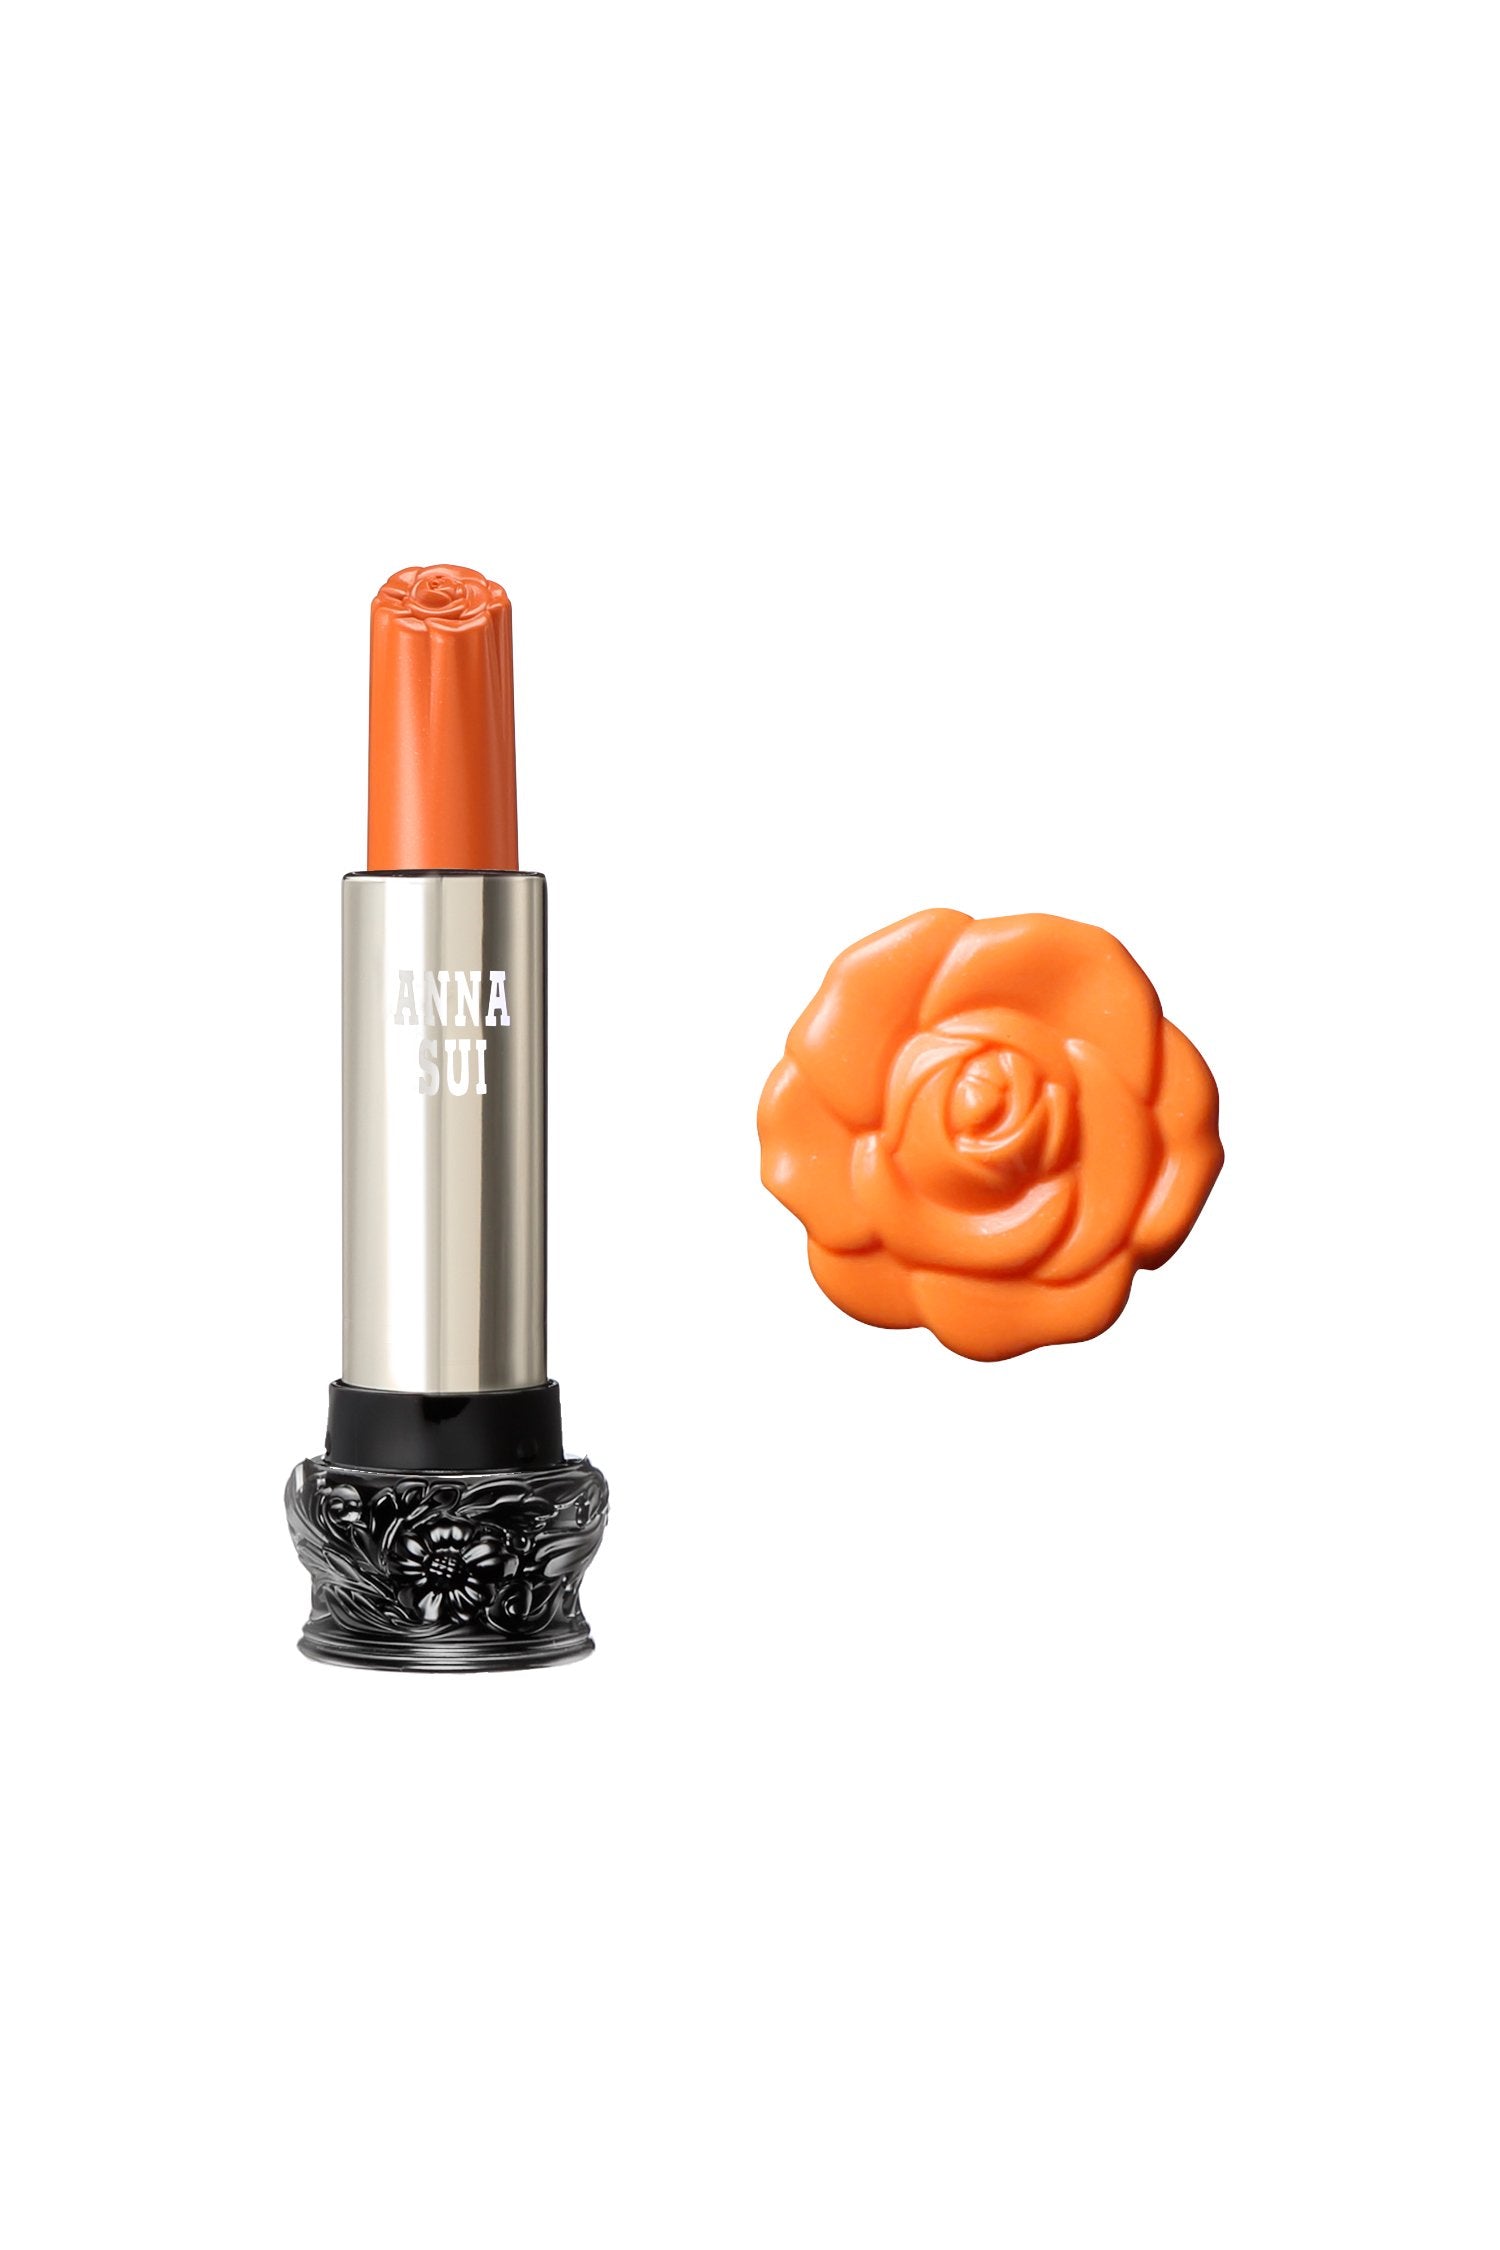 600-Orange Freesia Lipstick S: Sheer Flower, cylindrical, large black base, engraved floral design, metallic body 